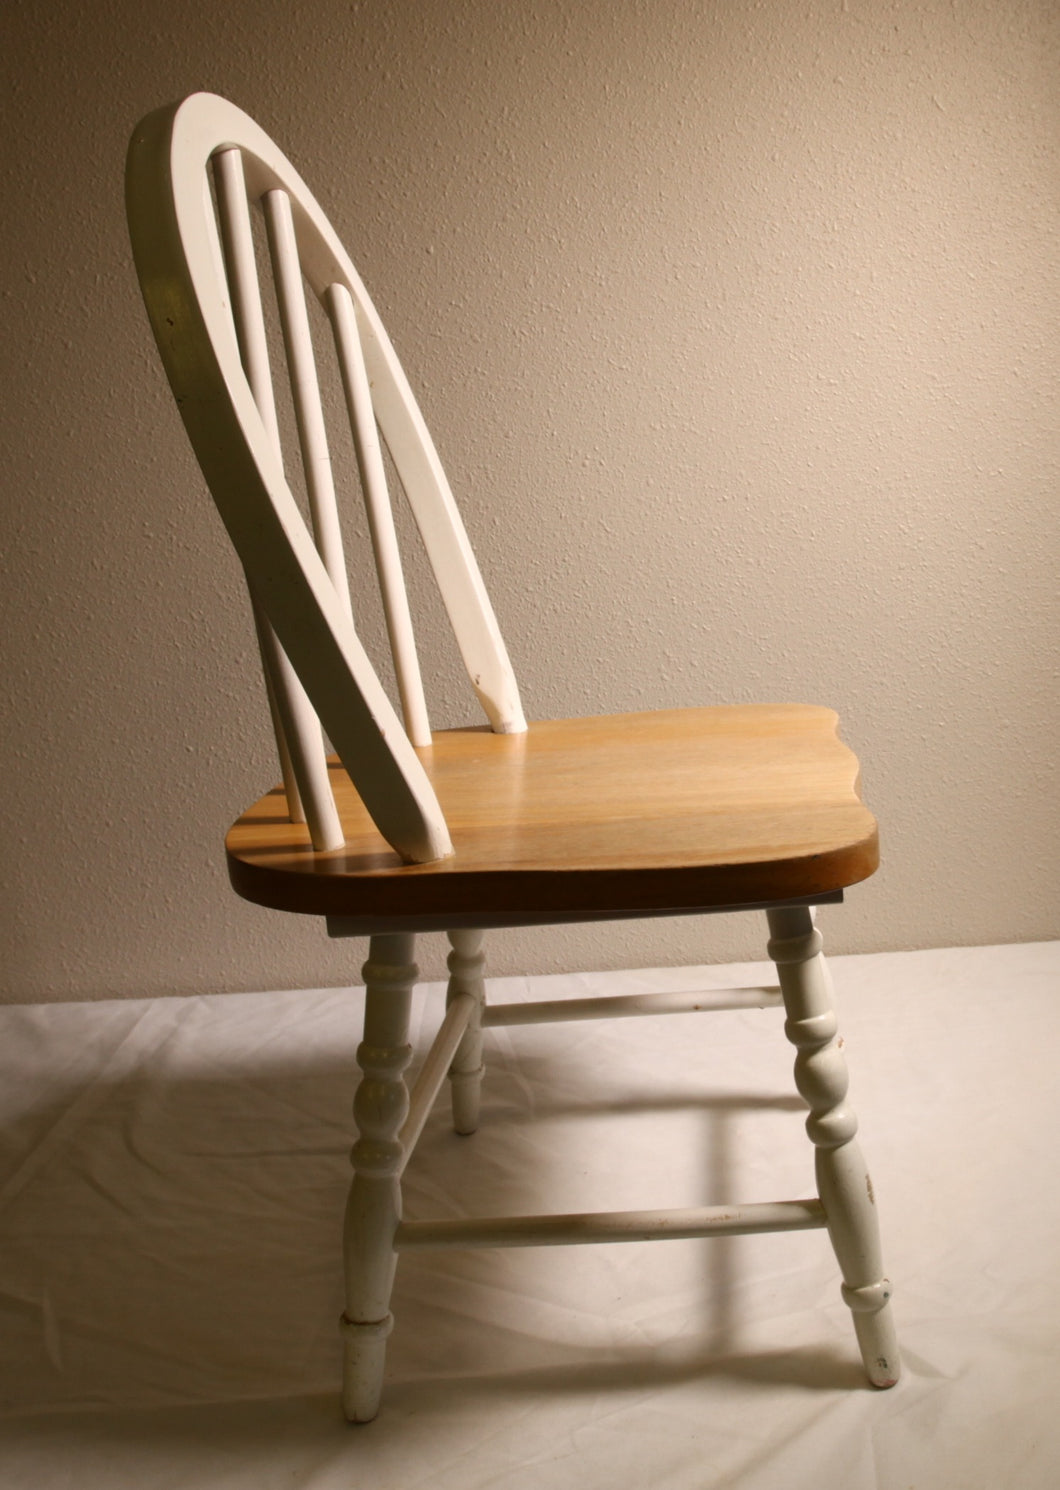 Wooden Chair #5: 11.5